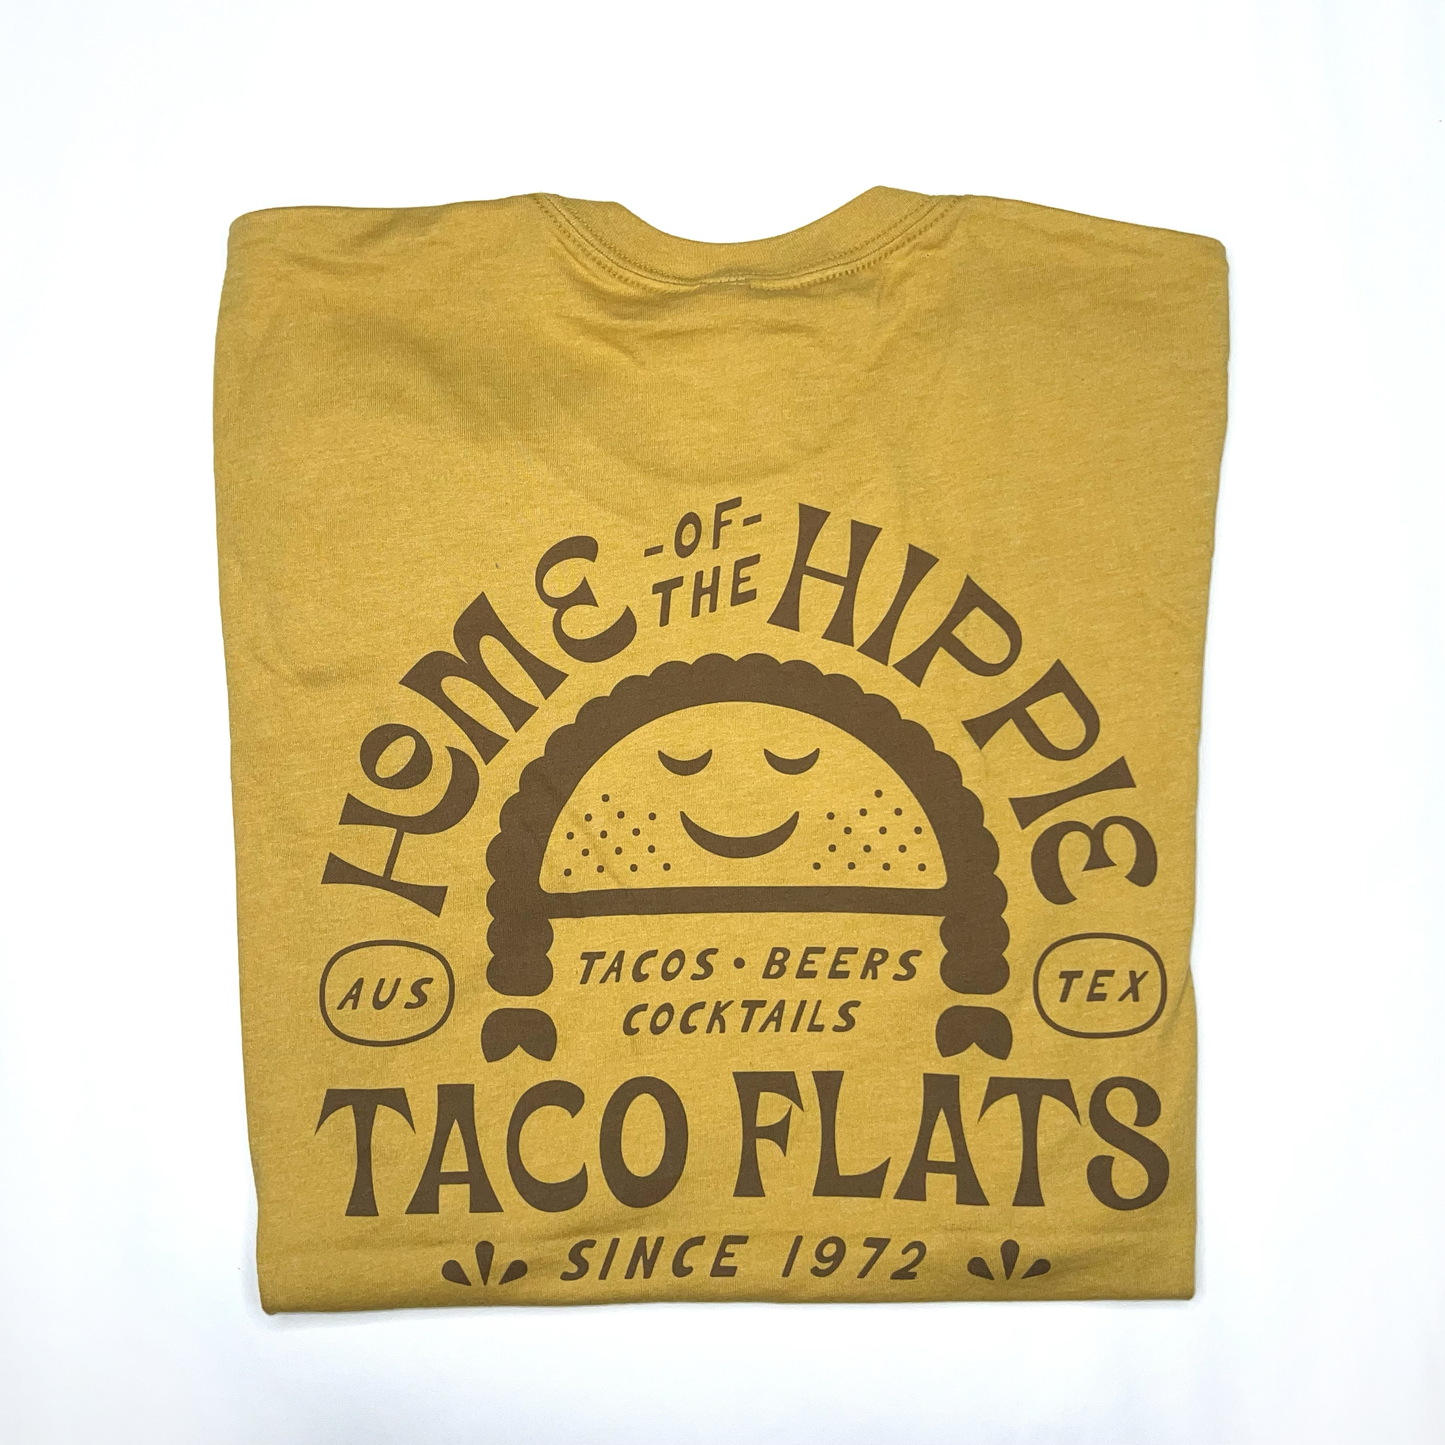 Taco Flats Yellow Hippie T-Shirt